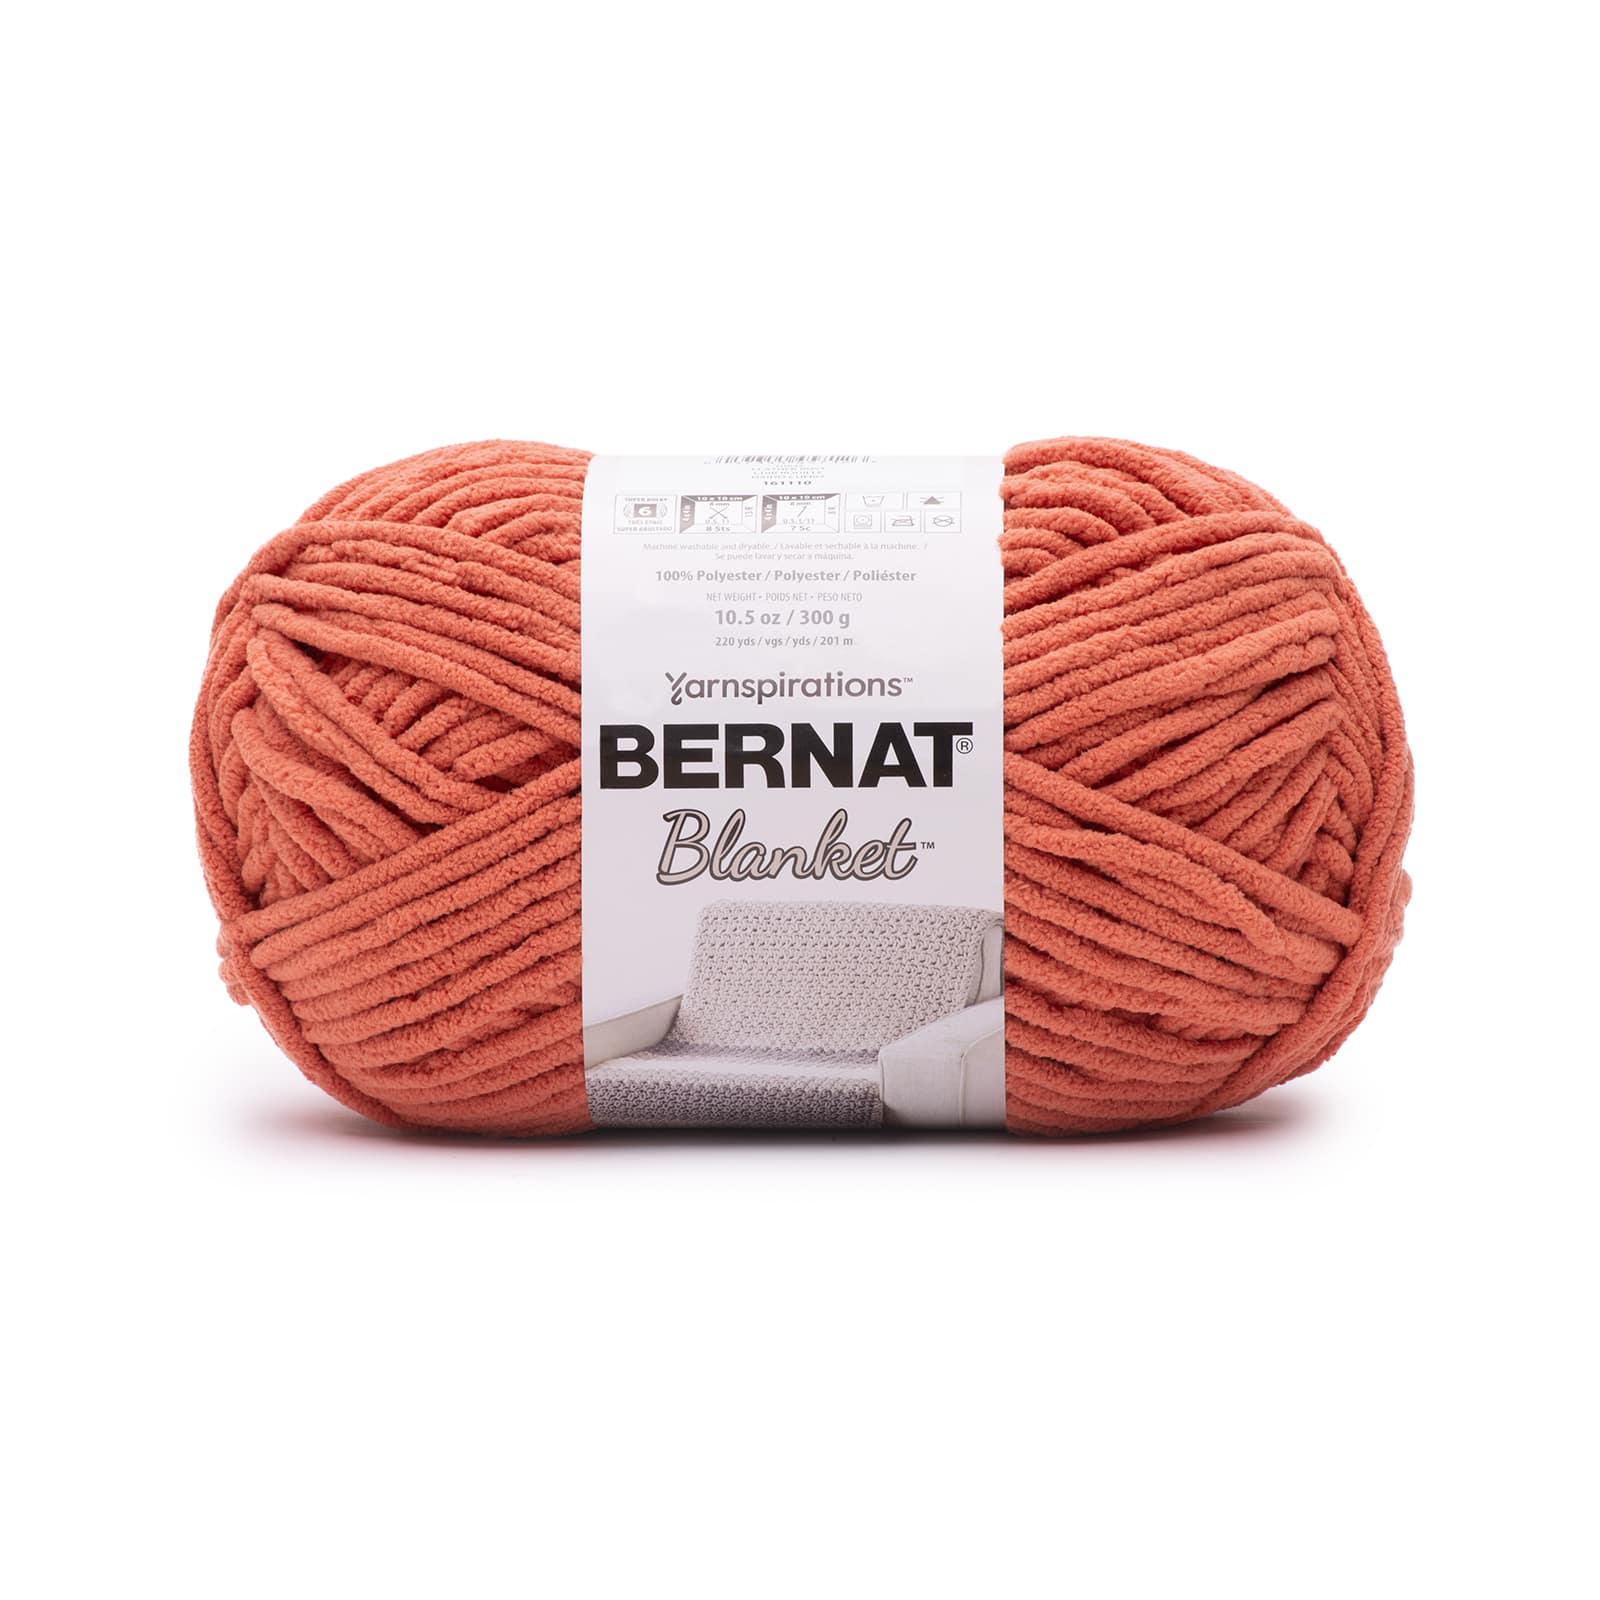 Bernat® Super Value™ Solid Yarn, Michaels